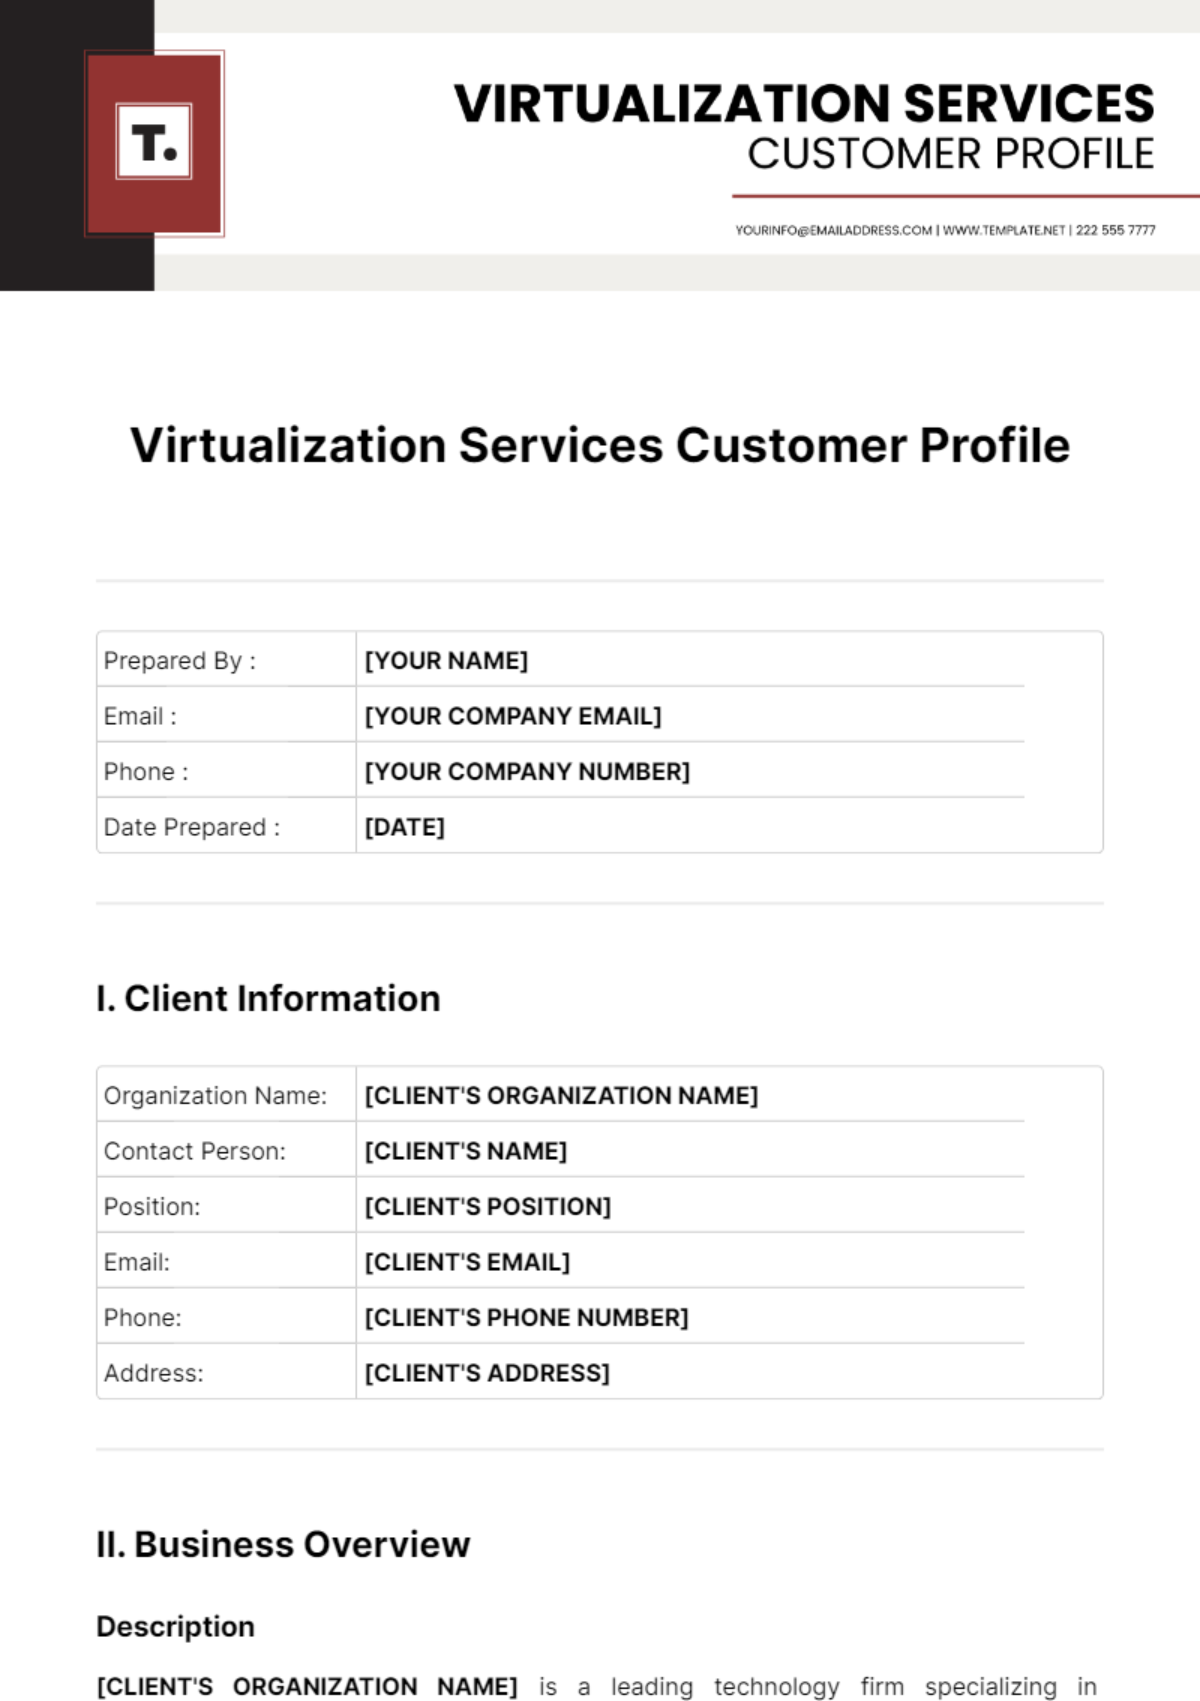 Virtualization Services Customer Profile Template